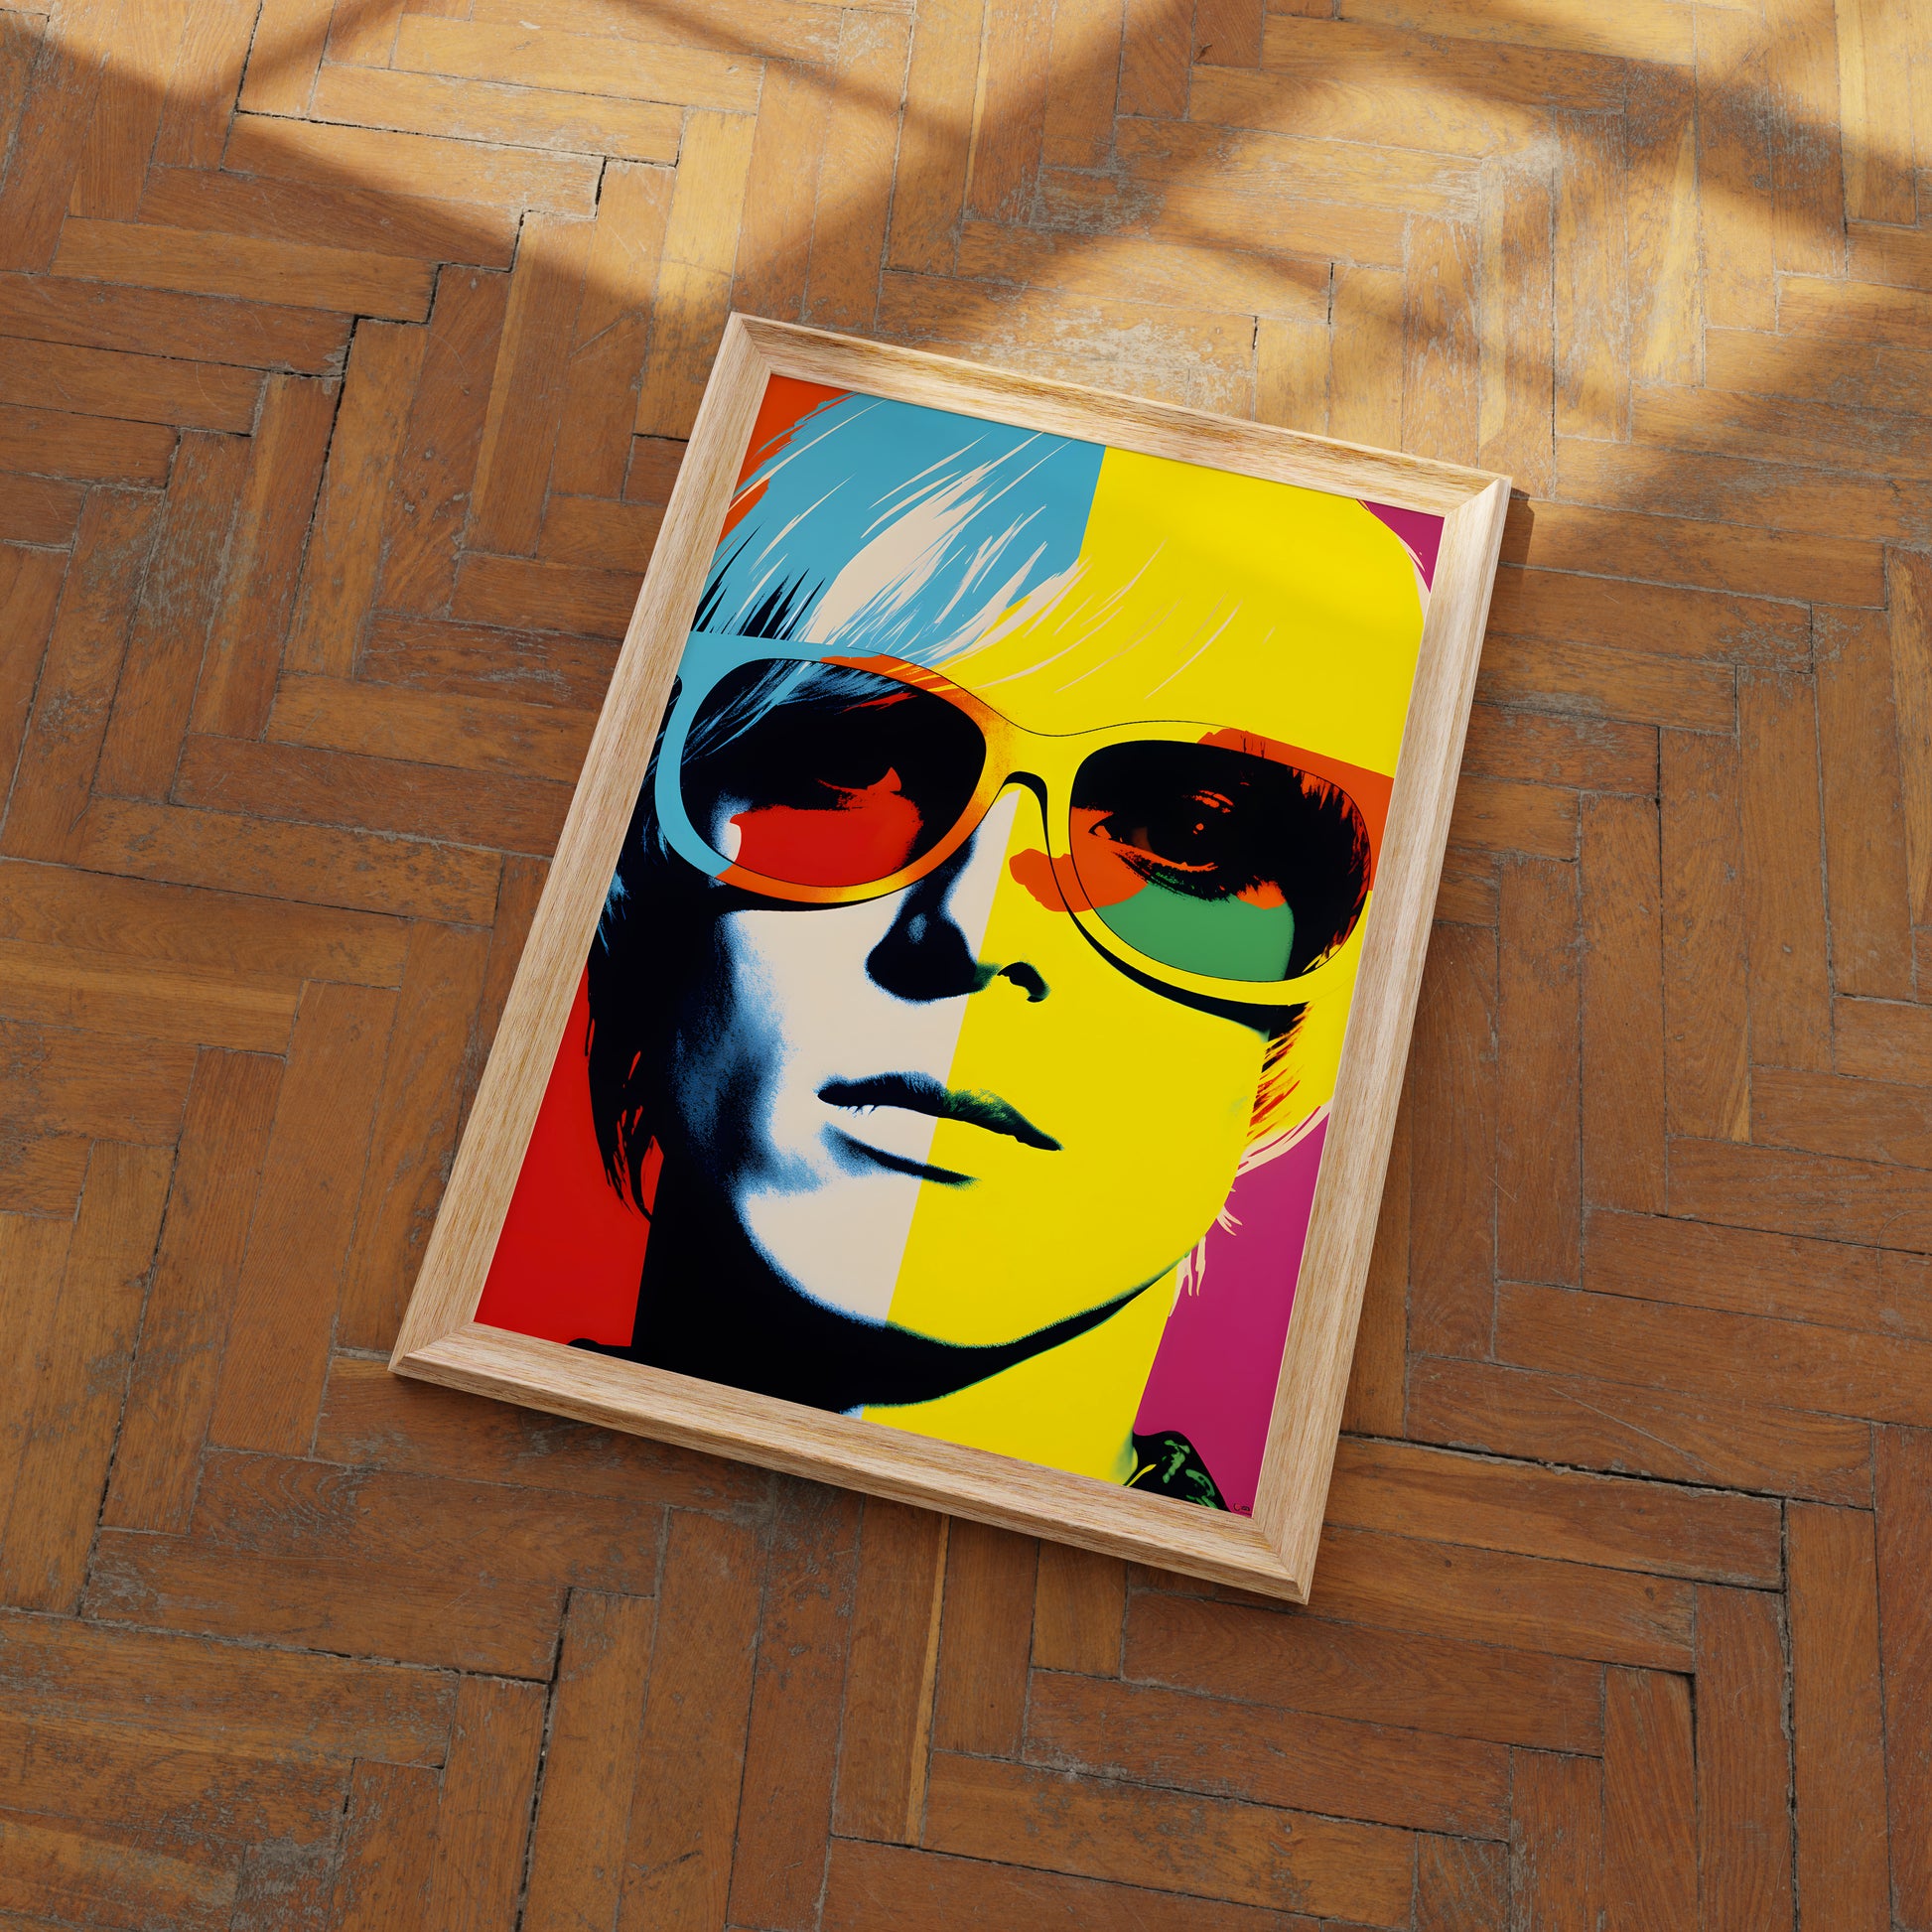 Colorful pop art-style portrait on a wooden floor.